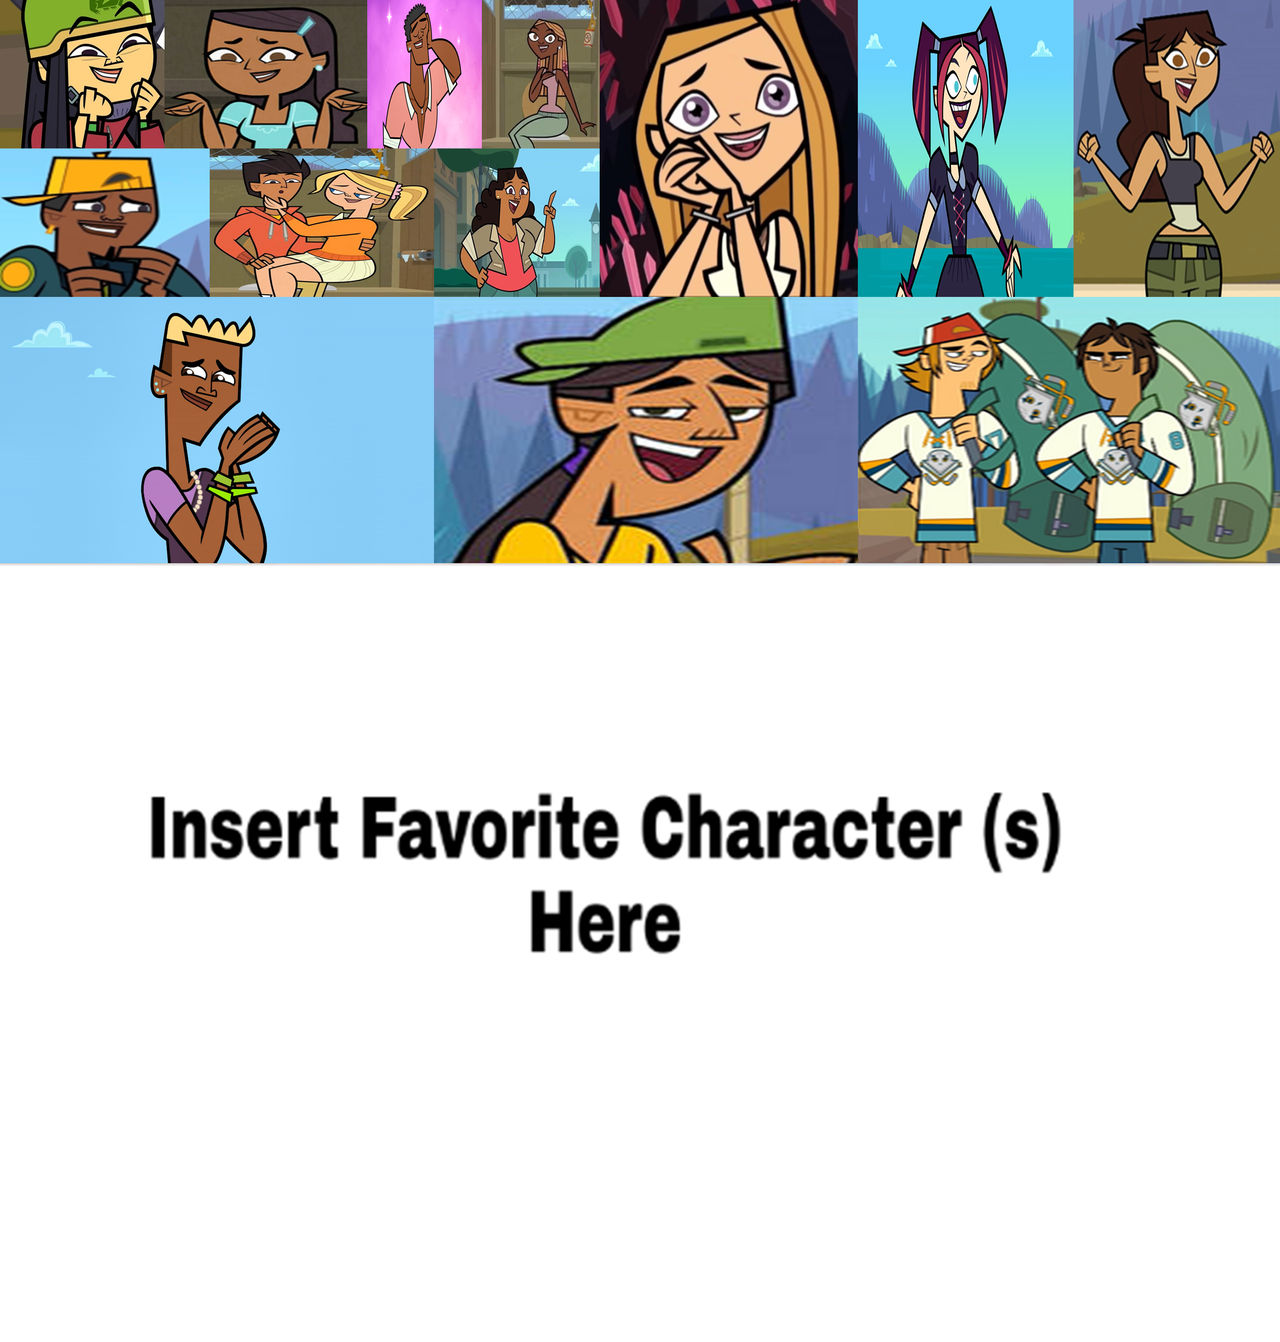 My Total Drama Island 2023 Character Tier List by pharrel3009 on DeviantArt